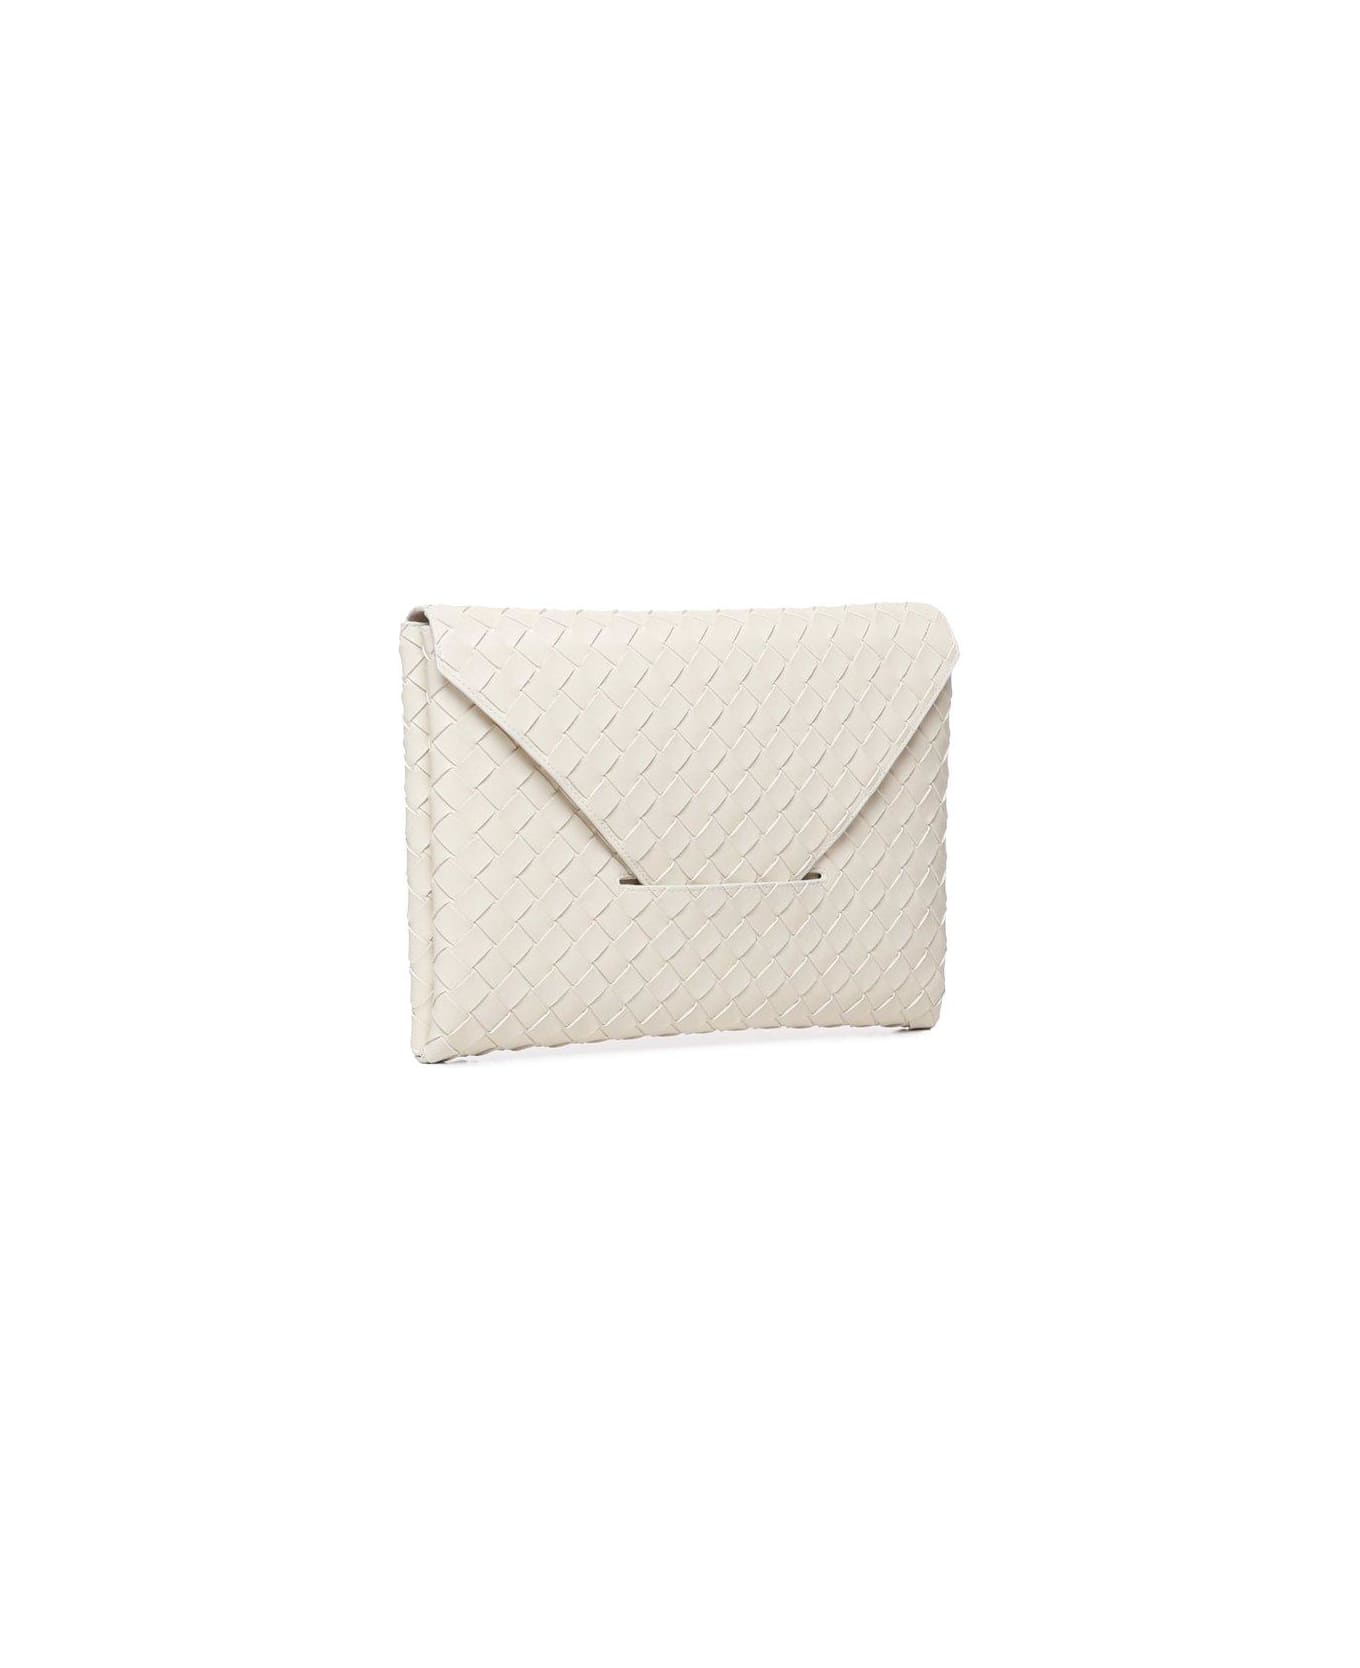 Bottega Veneta Origami Large Clutch Bag - White